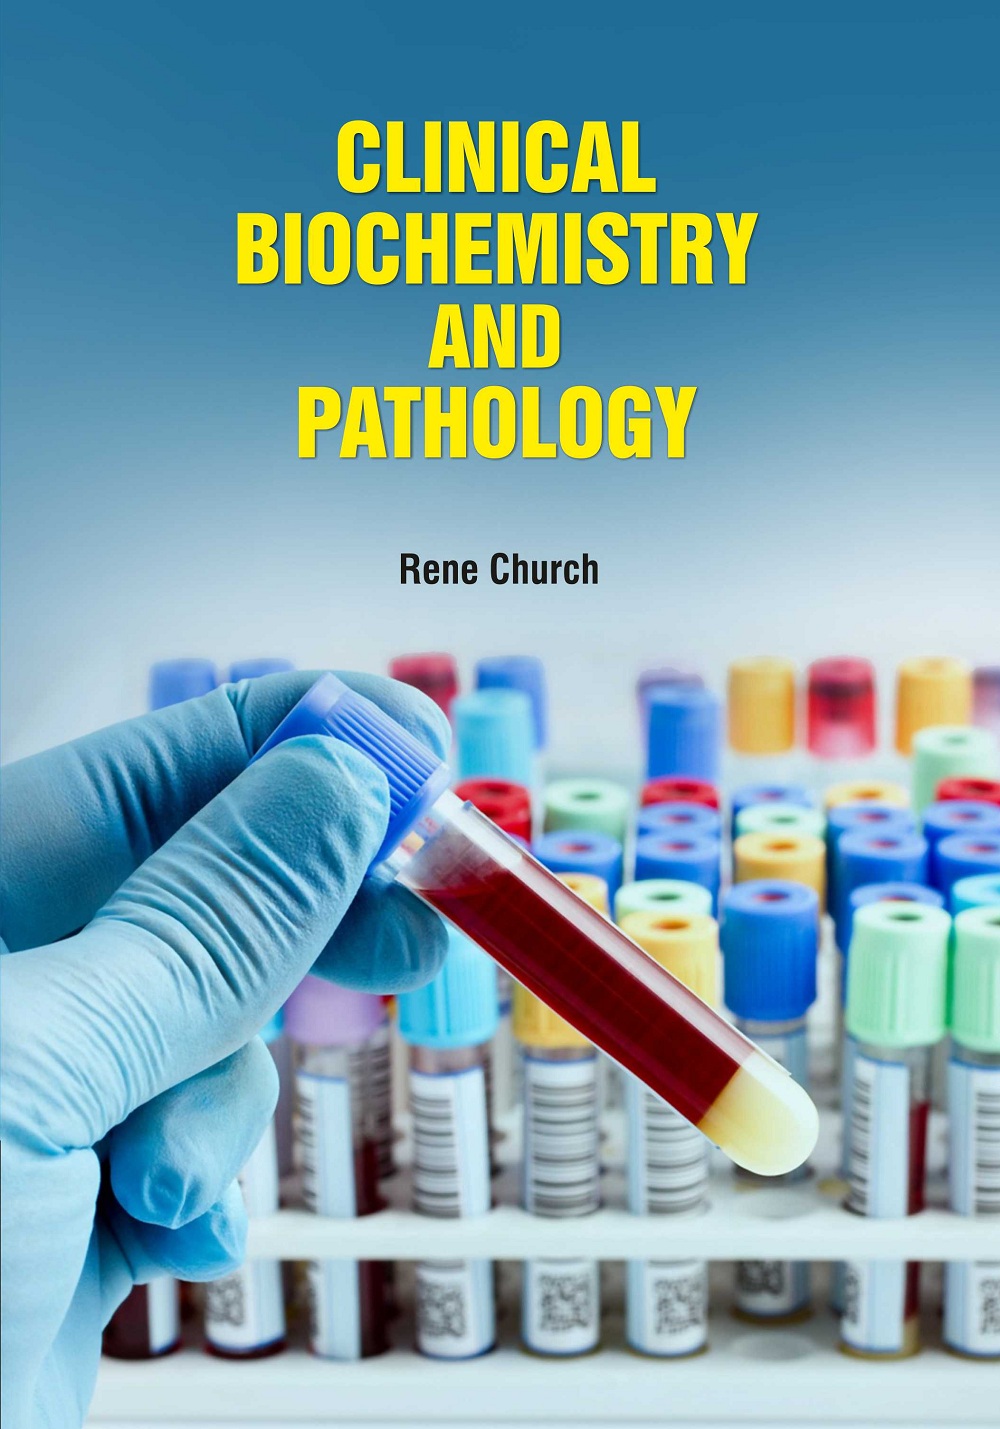 catalog/books/Clinical Biochemistry and Pathology.jpg